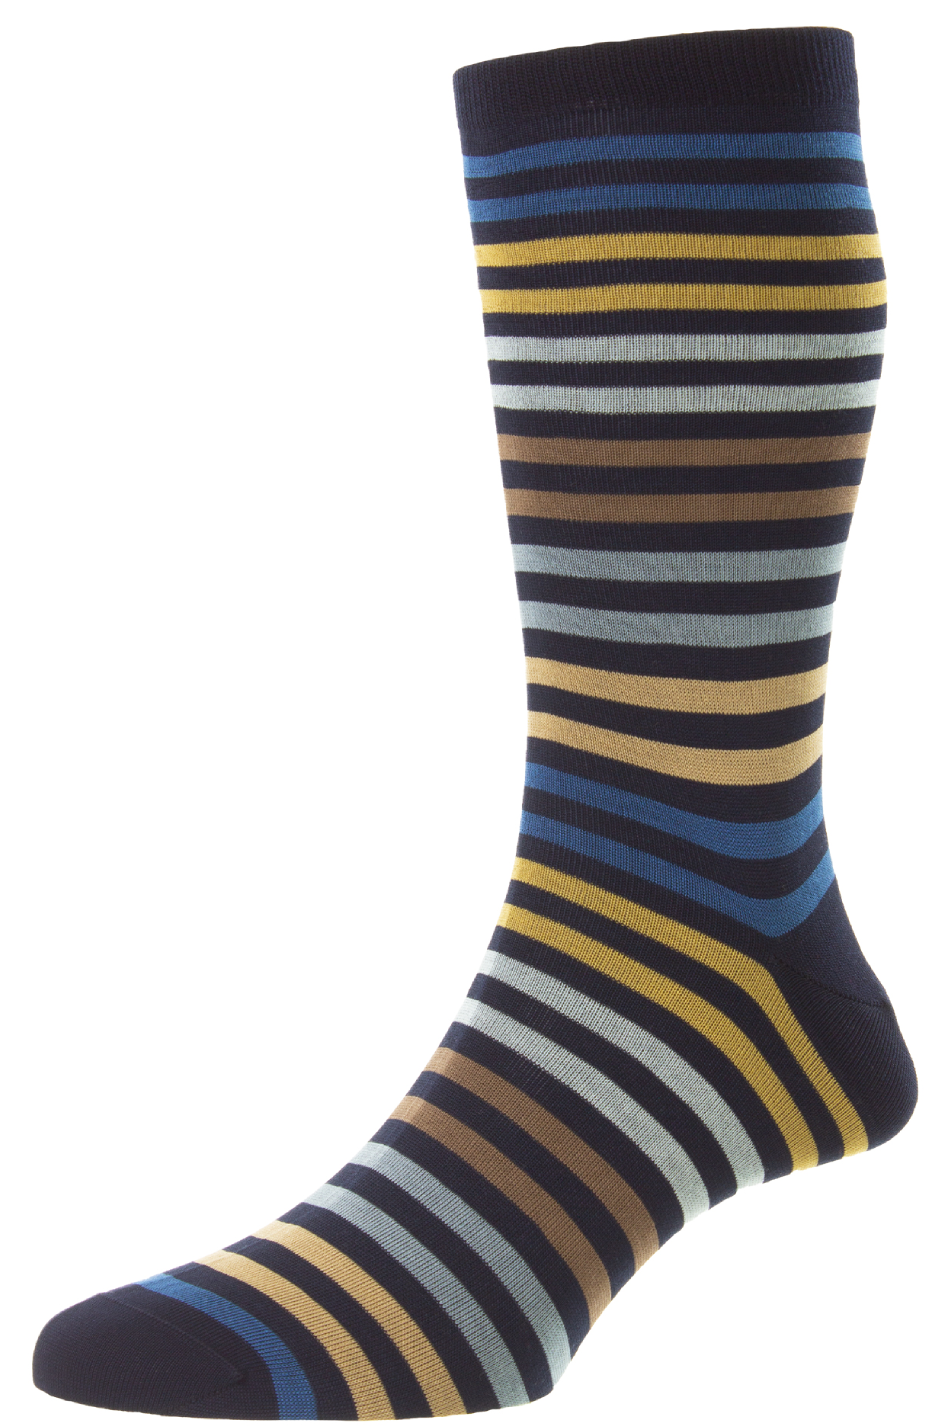 Pantherella Men's Kilburn Double Colour Block Sock